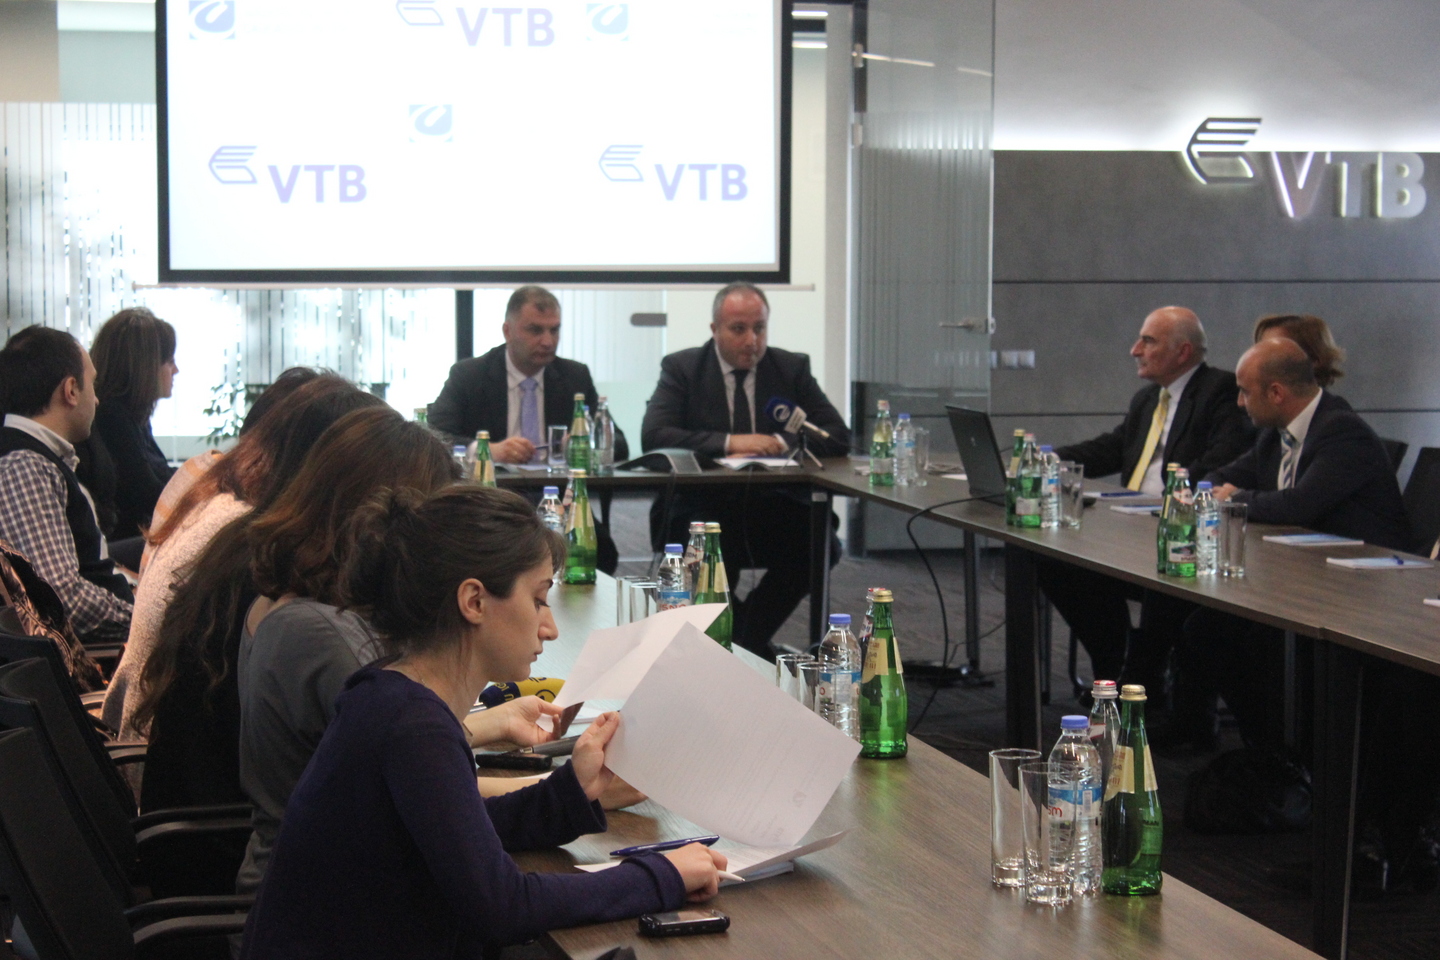 VTB ბანკი კავკასიის უნივერსიტეტის სტრატეგიული პარტნიორი გახდა